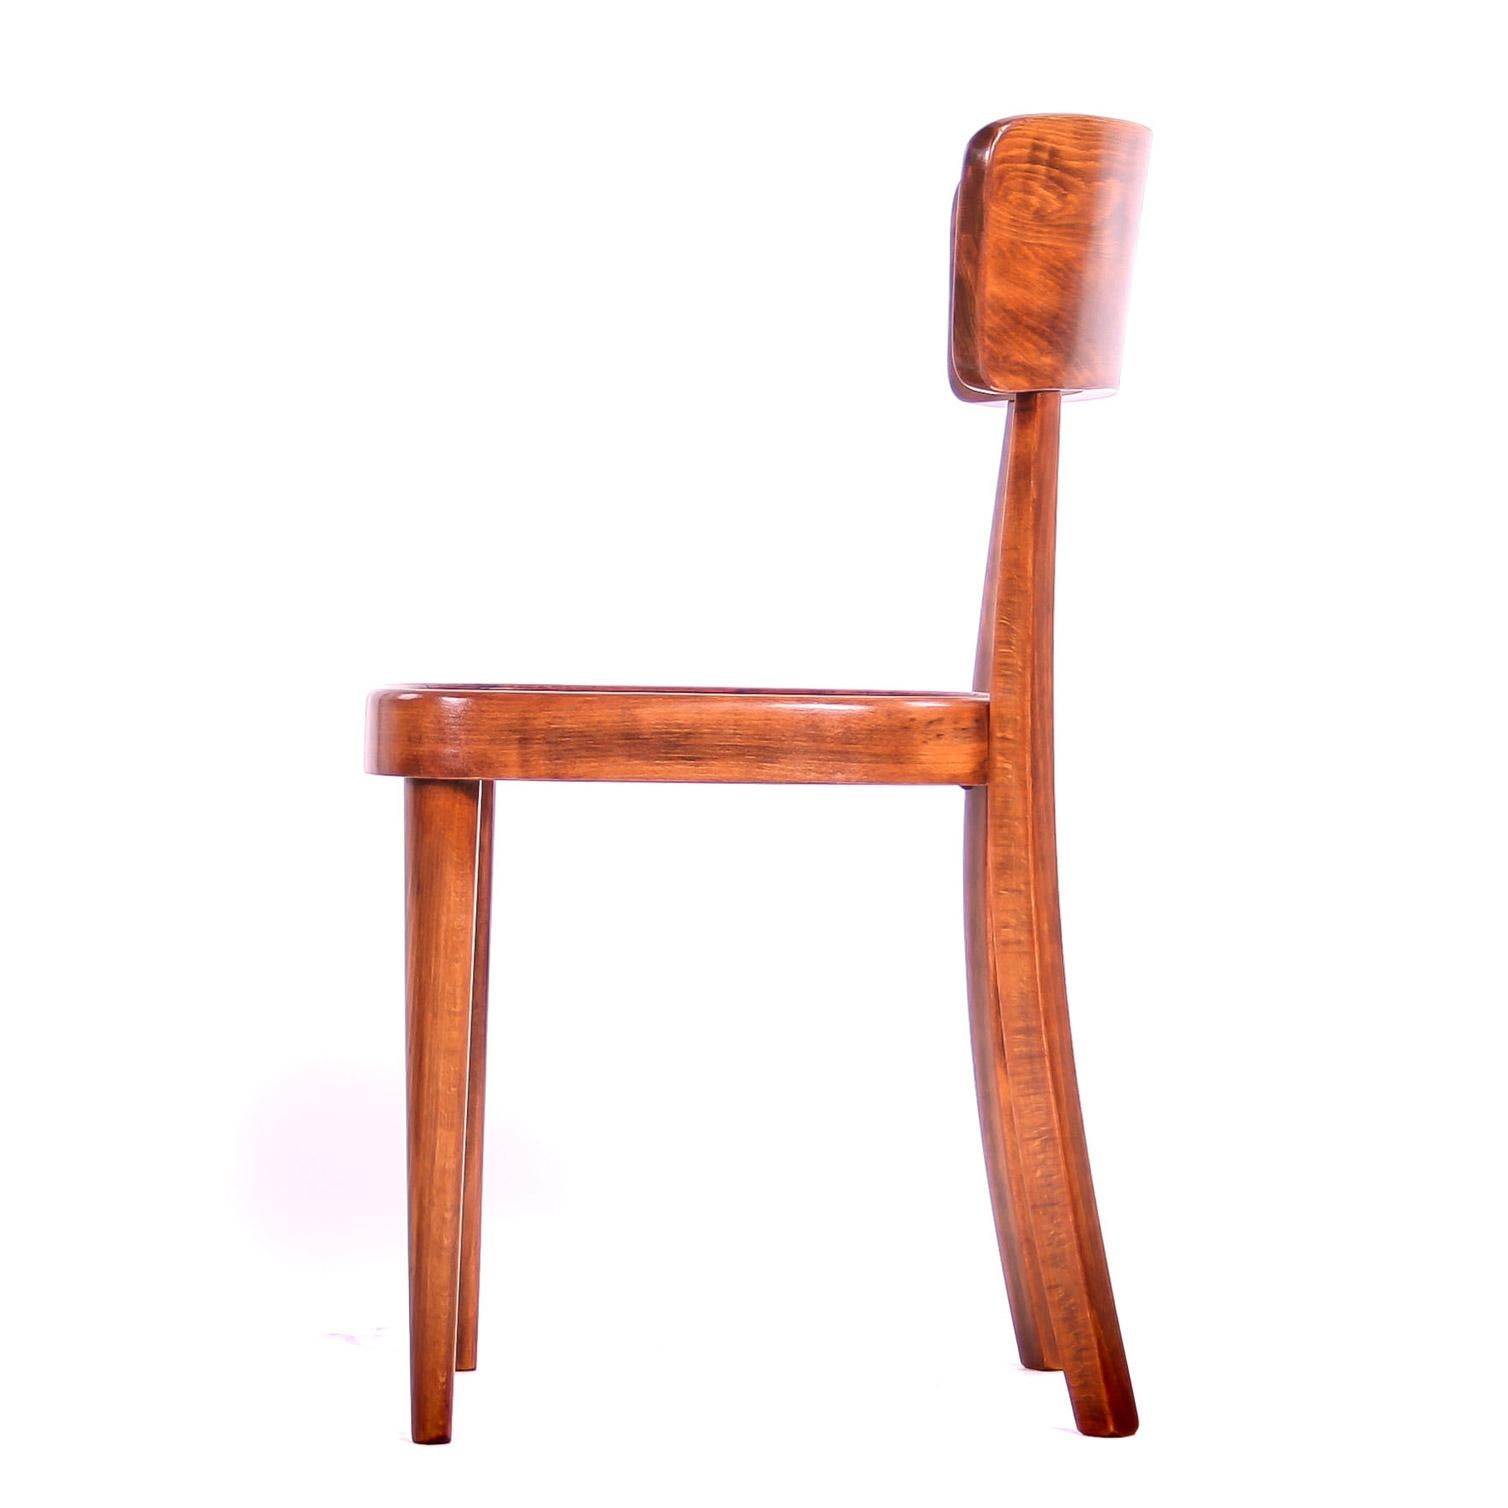 Czech Interwar Avantgard Design Dining Chairs by Jindrich Halabala 'Up Zavody' For Sale 2